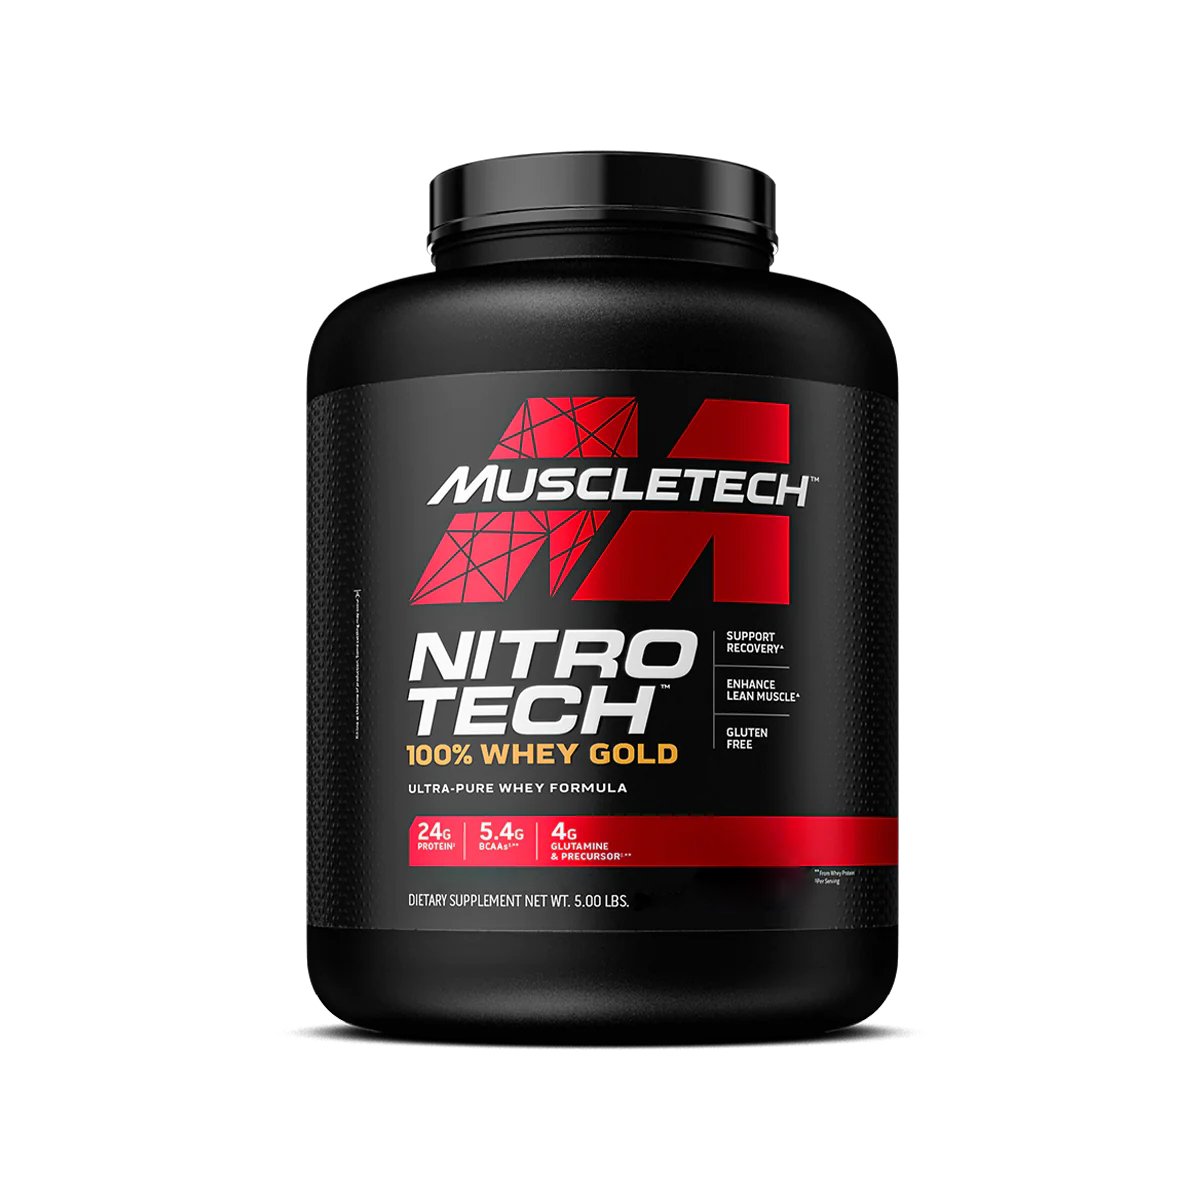 Протеин Muscletech Nitro Tech 100% Whey Gold, 2.27 кг Двойной шоколад,  мл, MuscleTech. Протеин. Набор массы Восстановление Антикатаболические свойства 